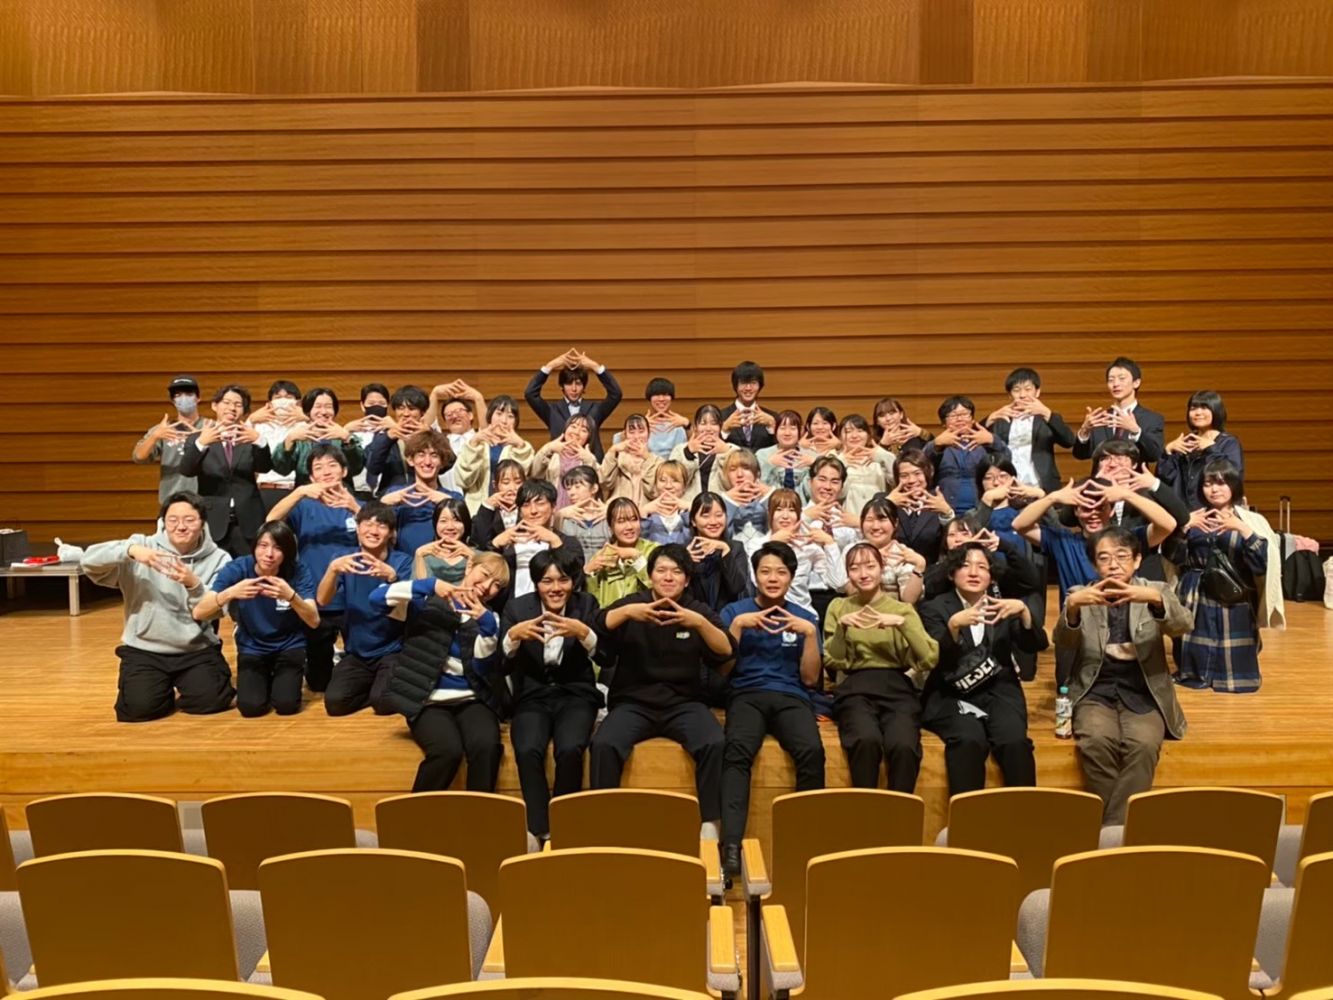 静岡キャンパス吹奏楽研究会